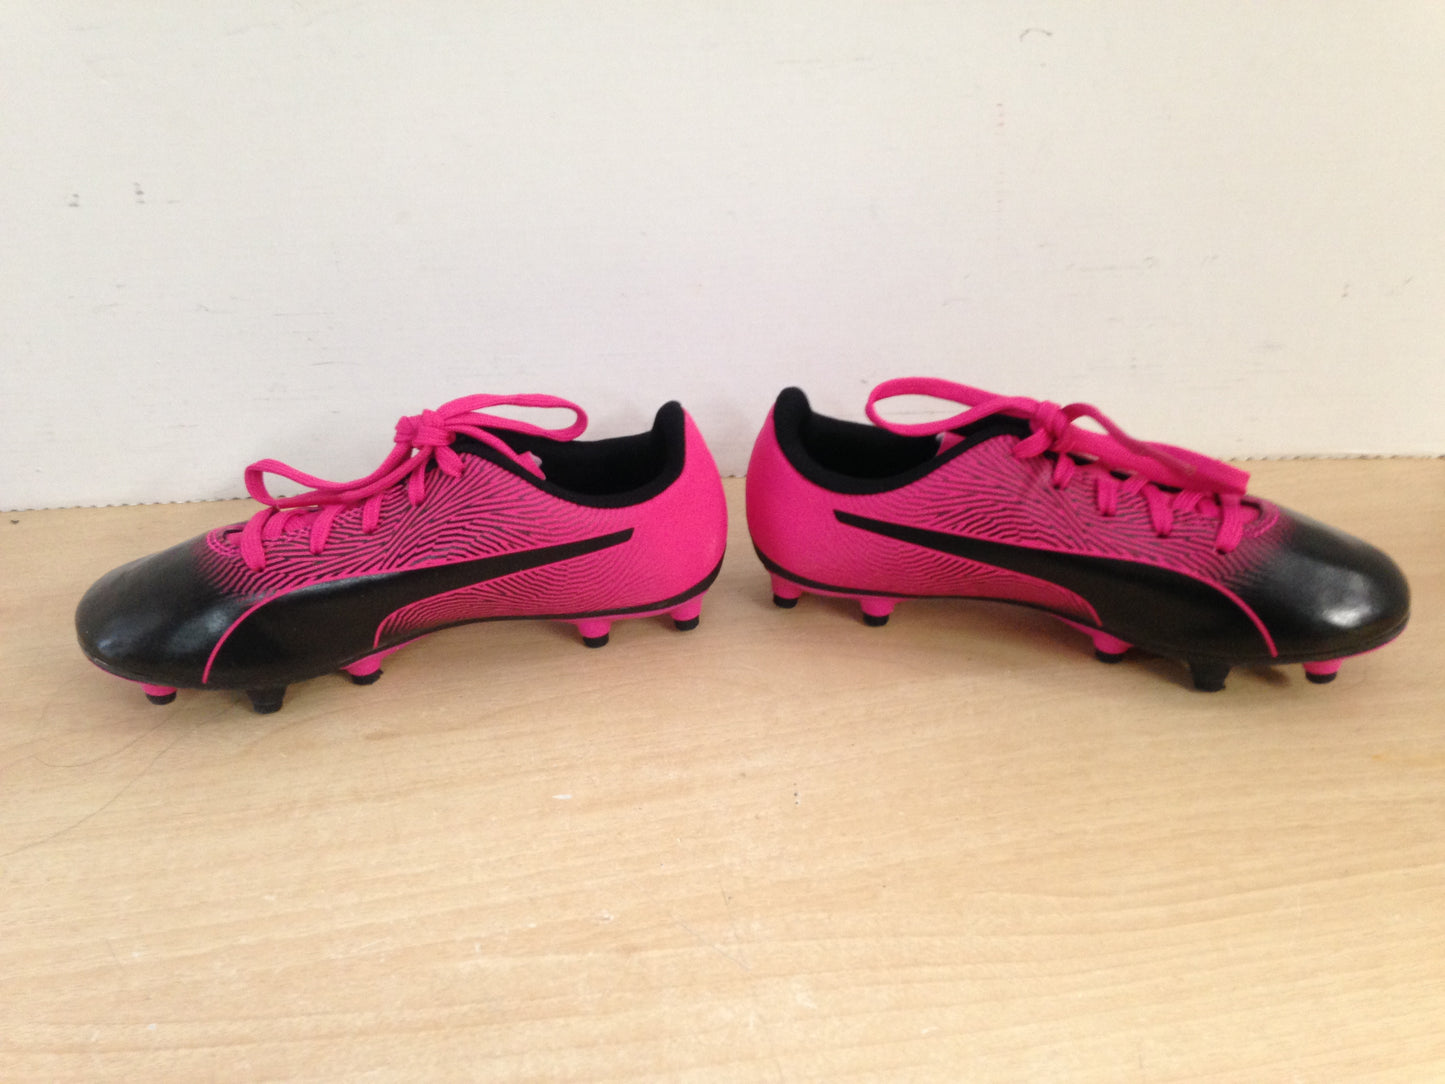 Soccer Shoes Cleats Child Size 13 Puma Pink Black Excellent